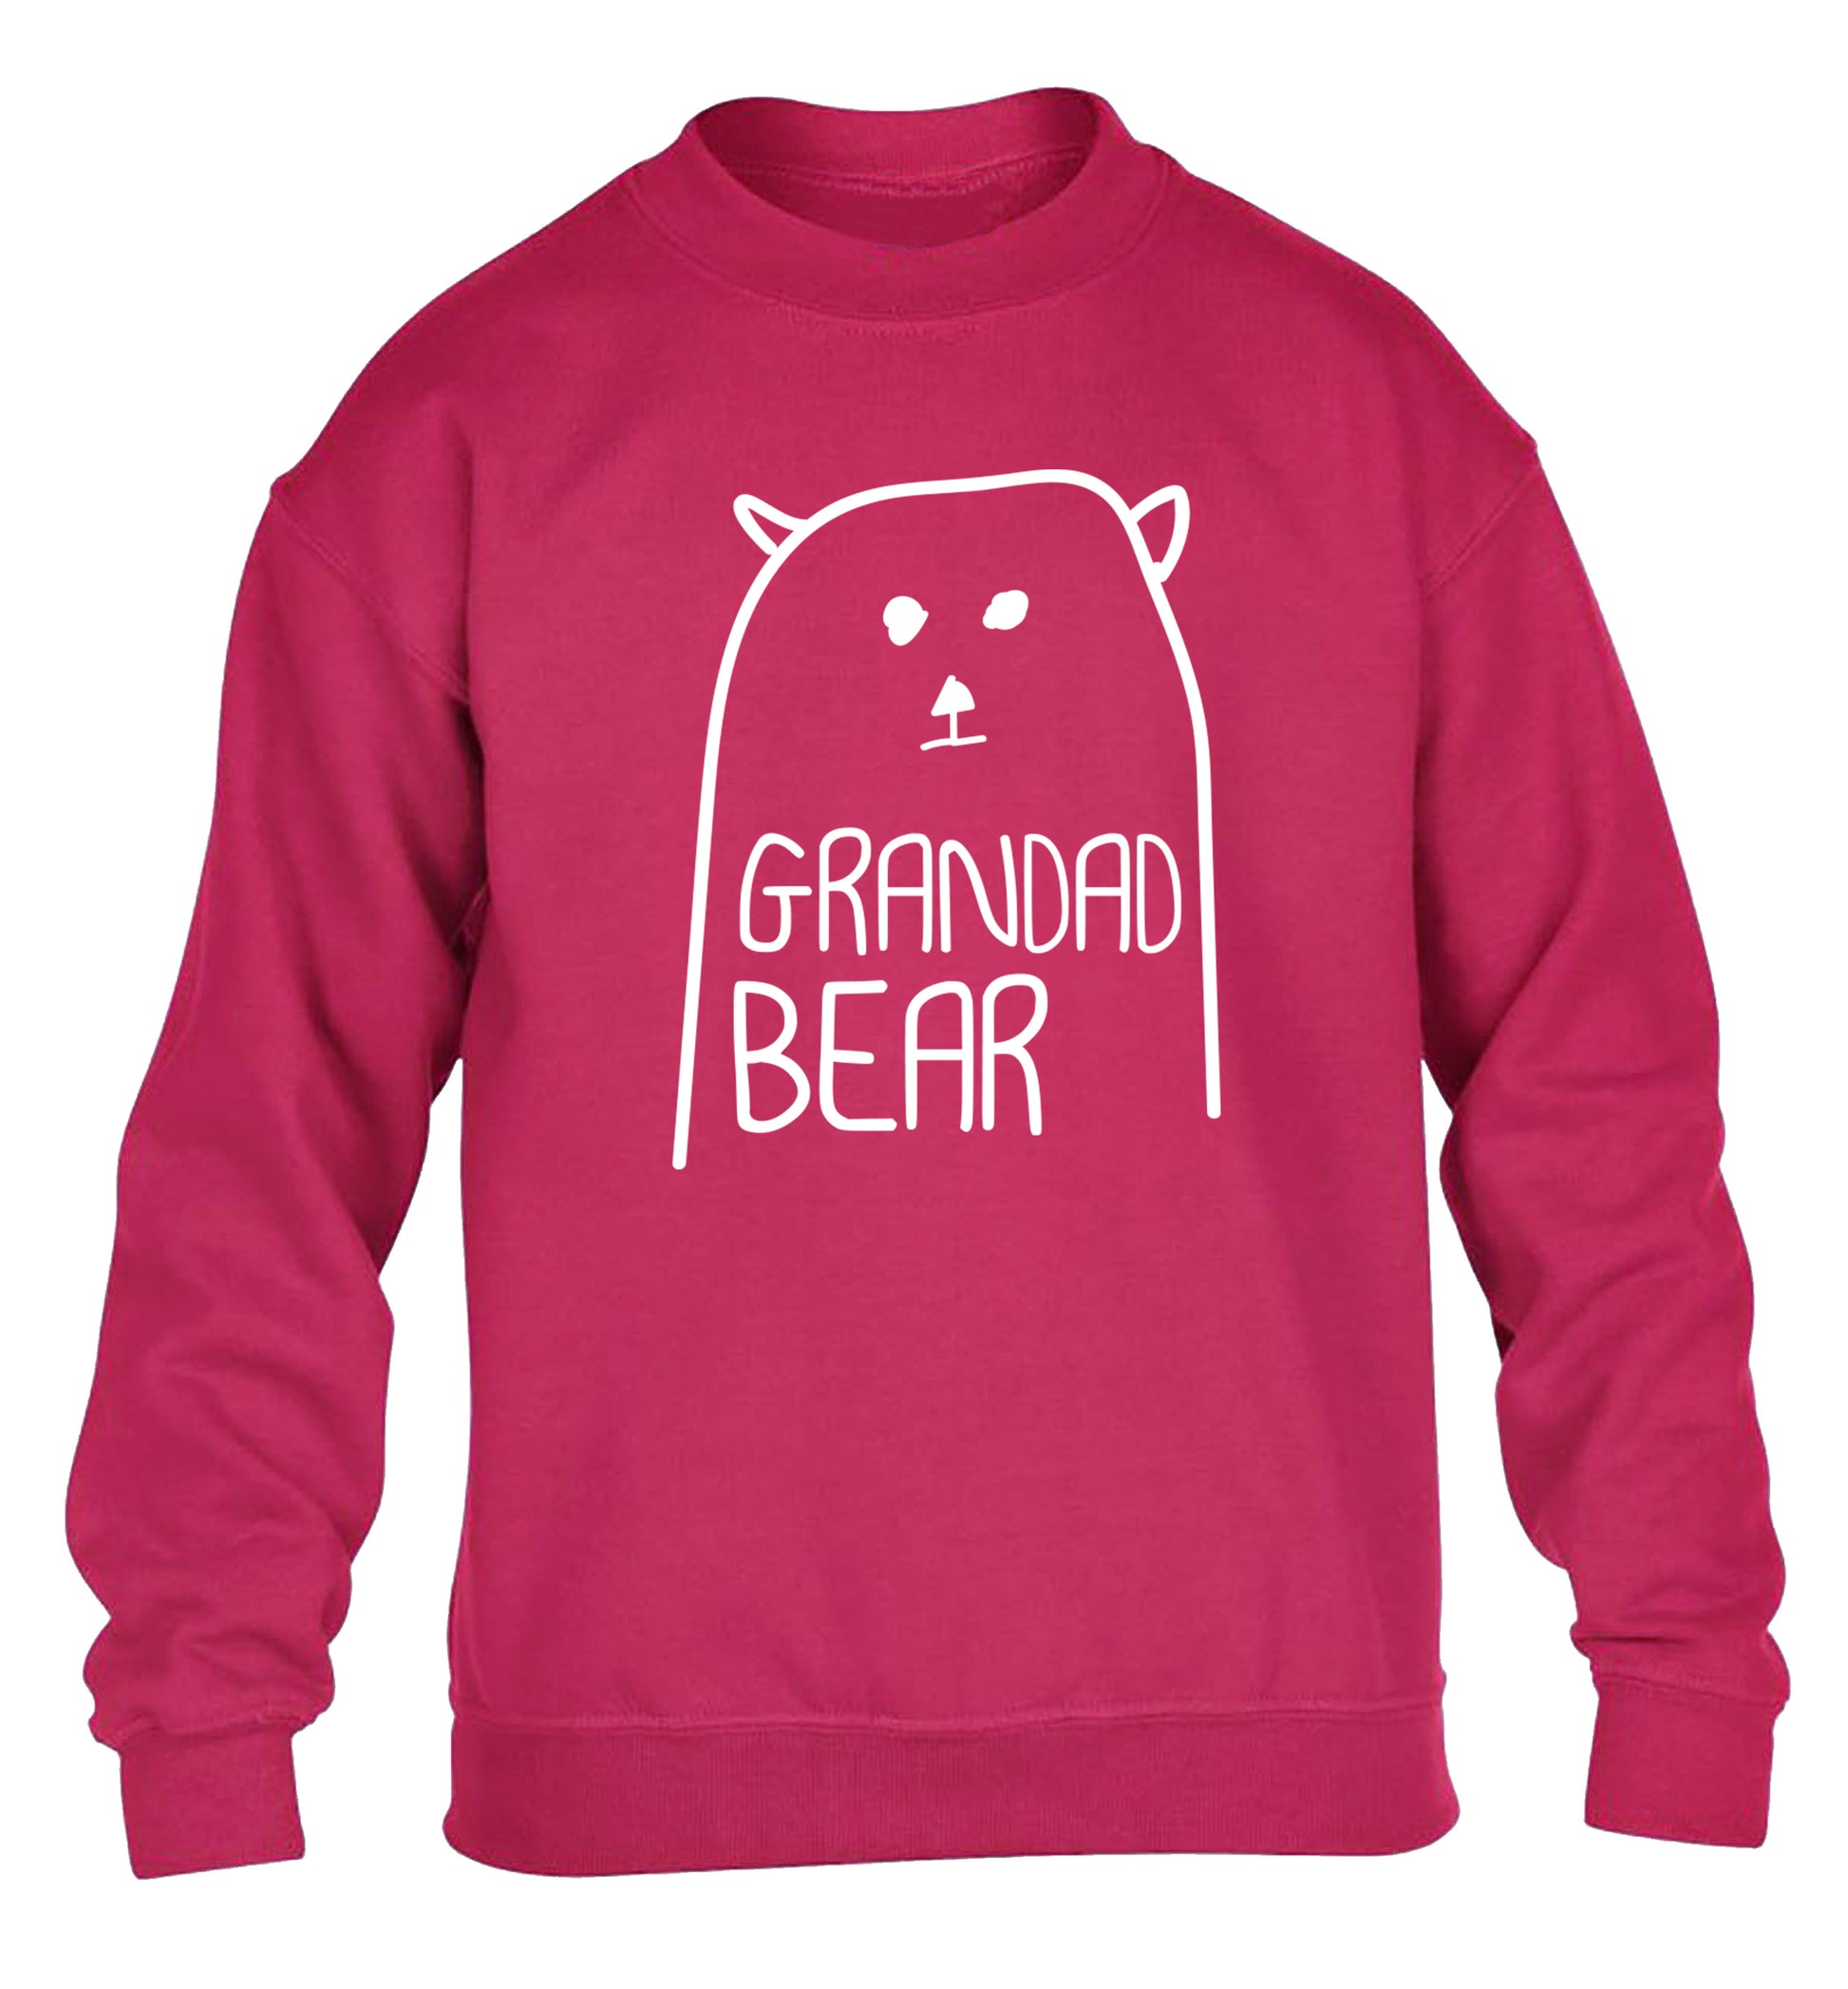 Grandad bear children's pink sweater 12-13 Years